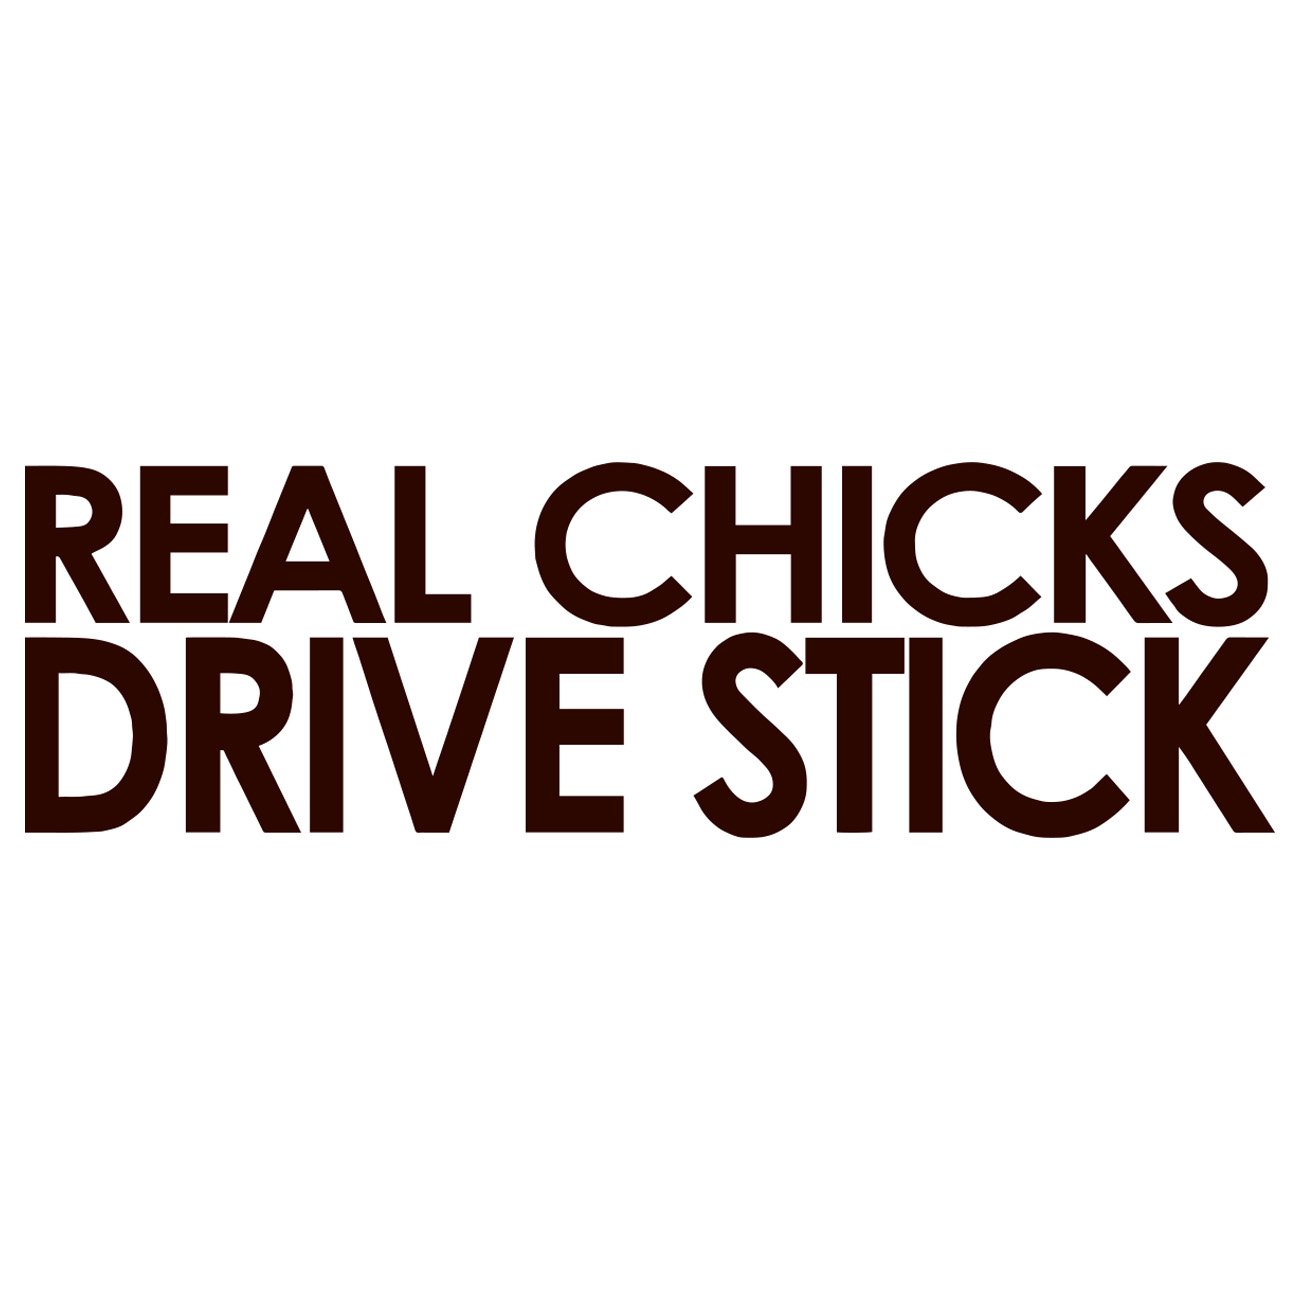 Real chicks drive stick